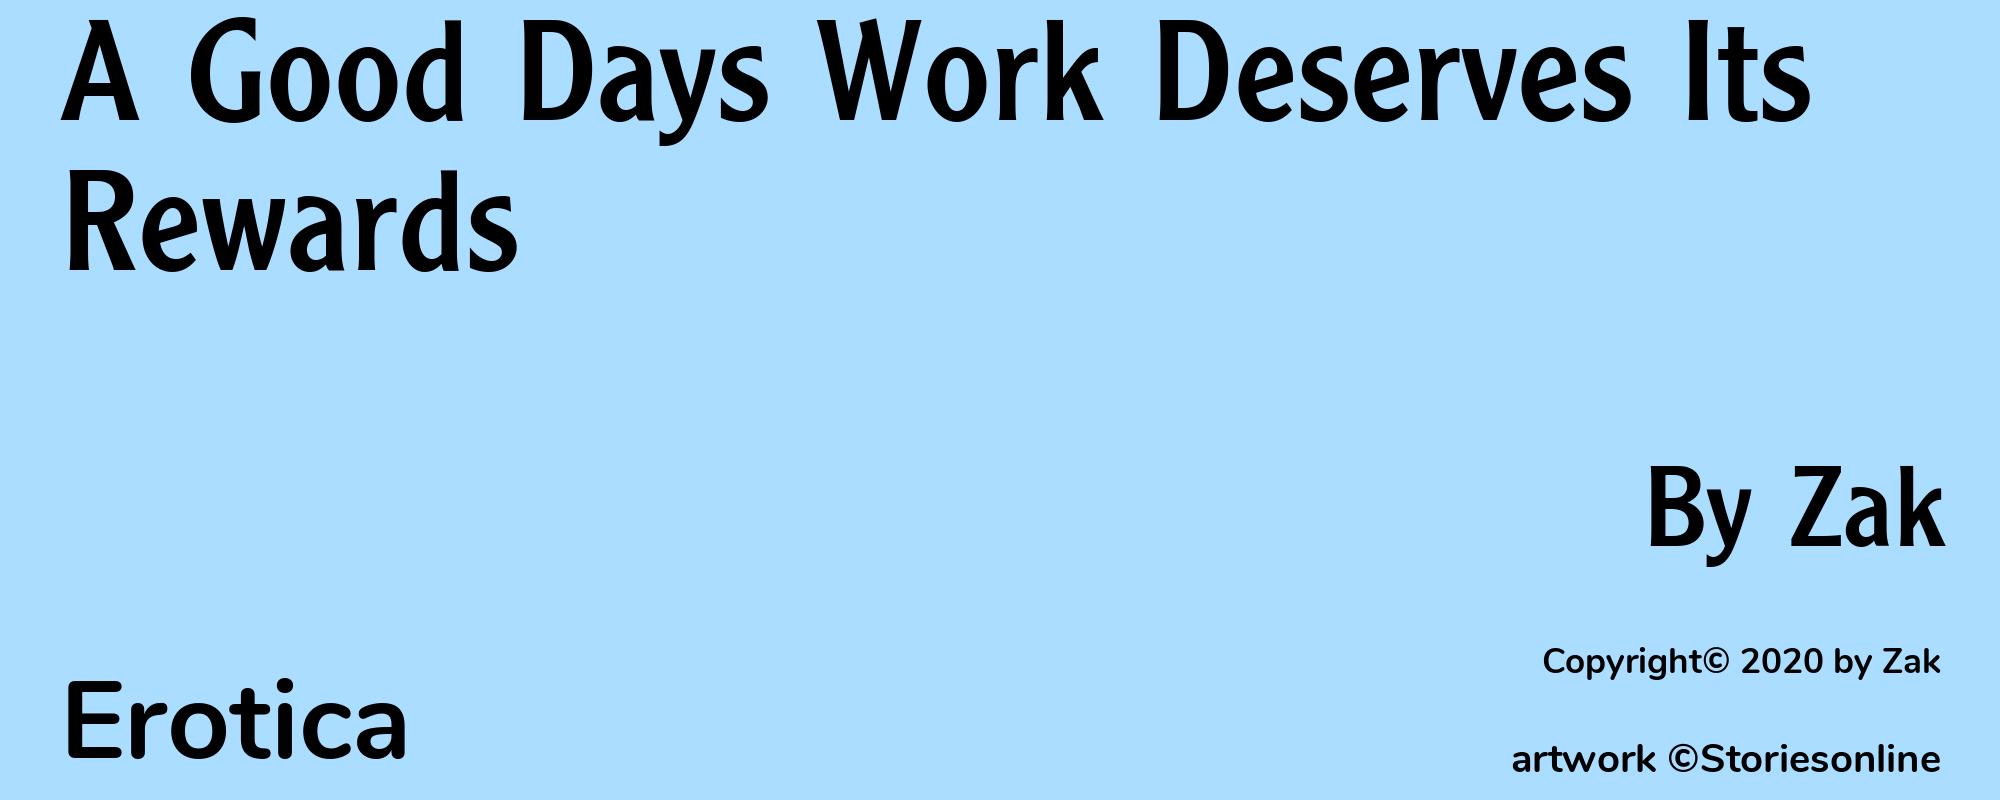 A Good Days Work Deserves Its Rewards - Cover